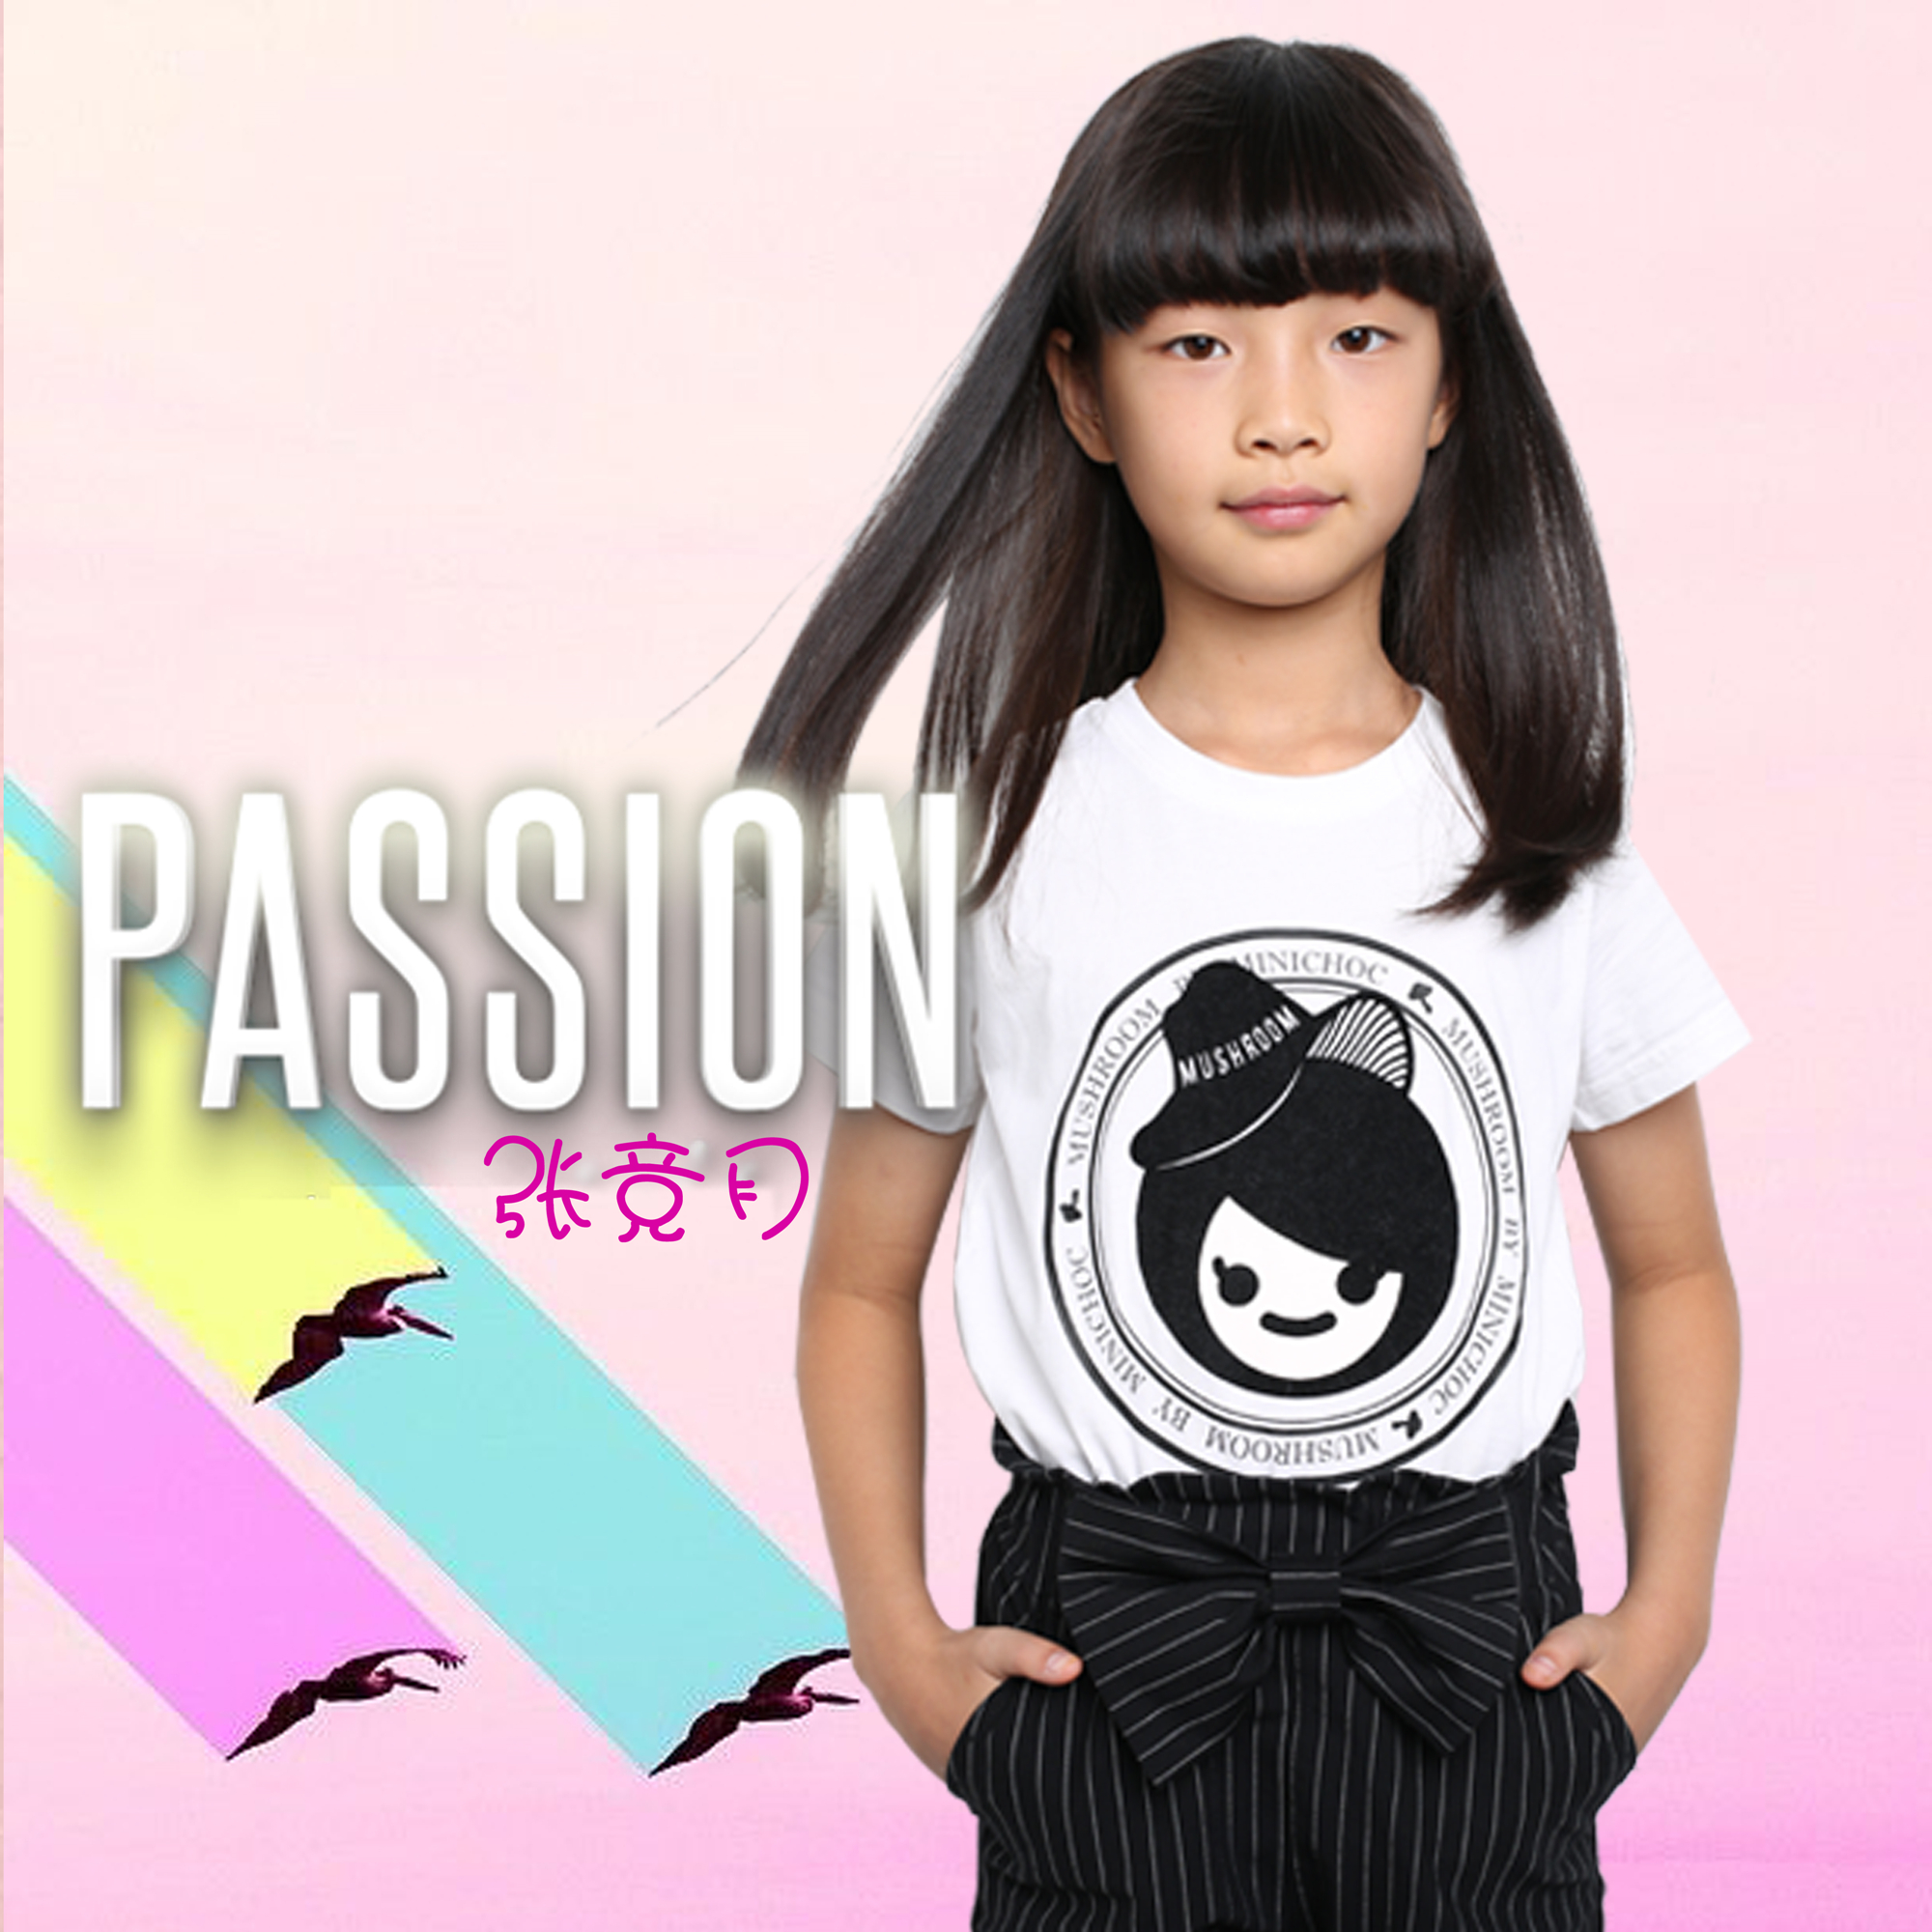 passion(Passion 張競月演唱歌曲)